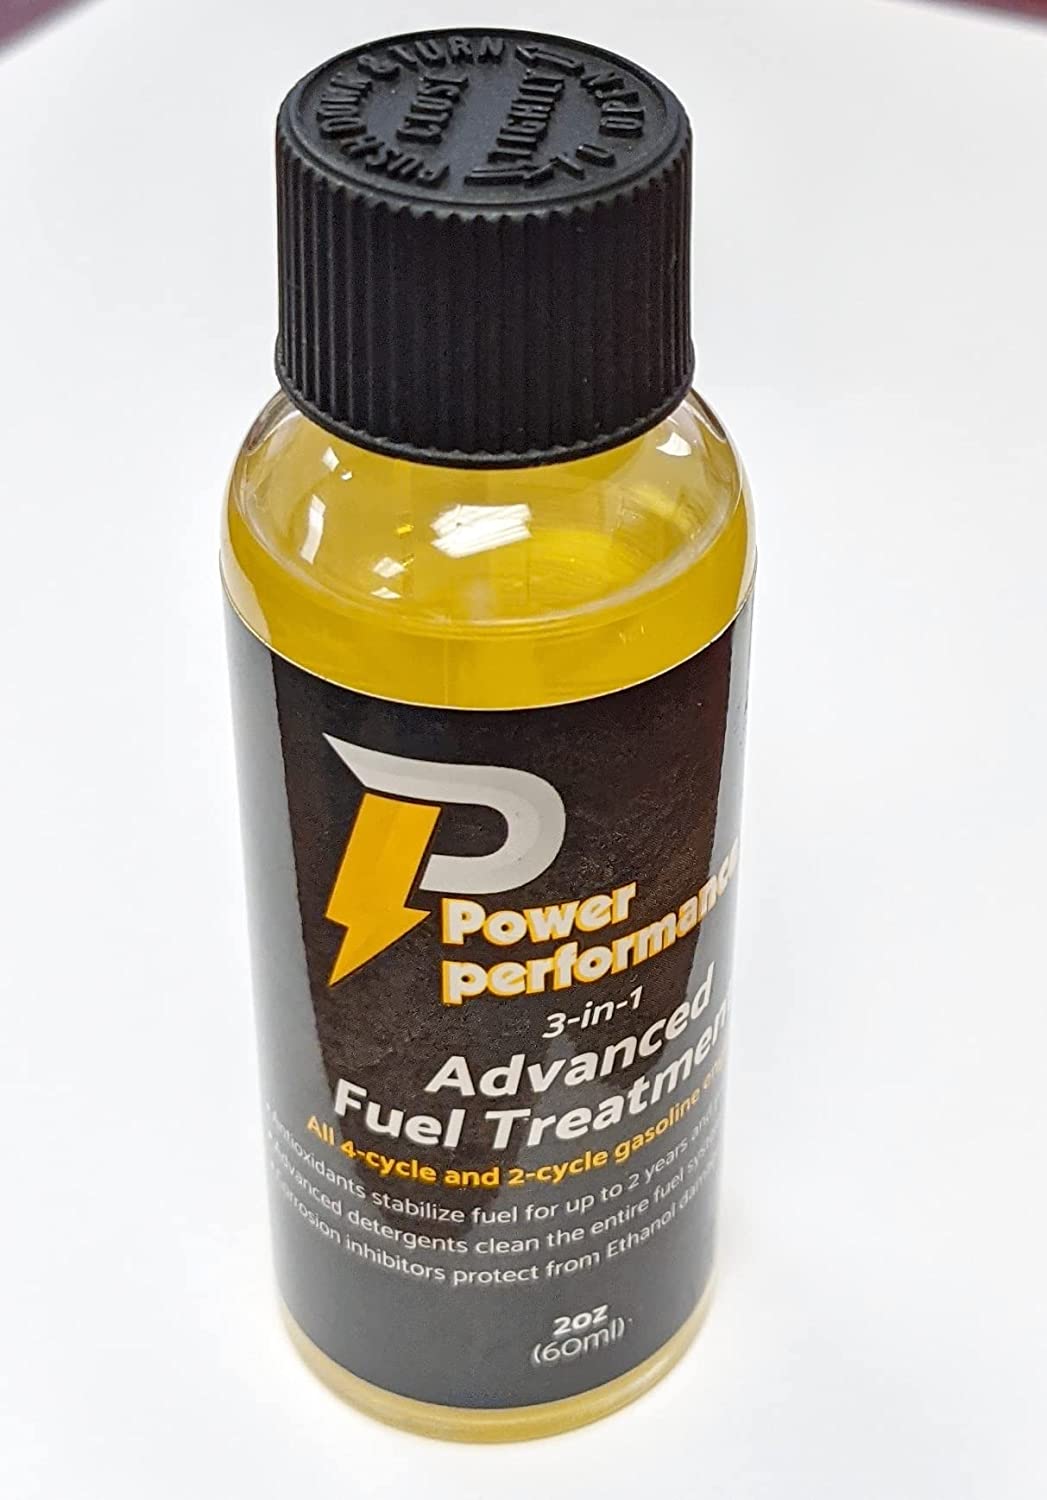 Power Performance 3-in-1 Advanced Fuel Treatment 2oz Bottle (Treats 10 gal) #31001